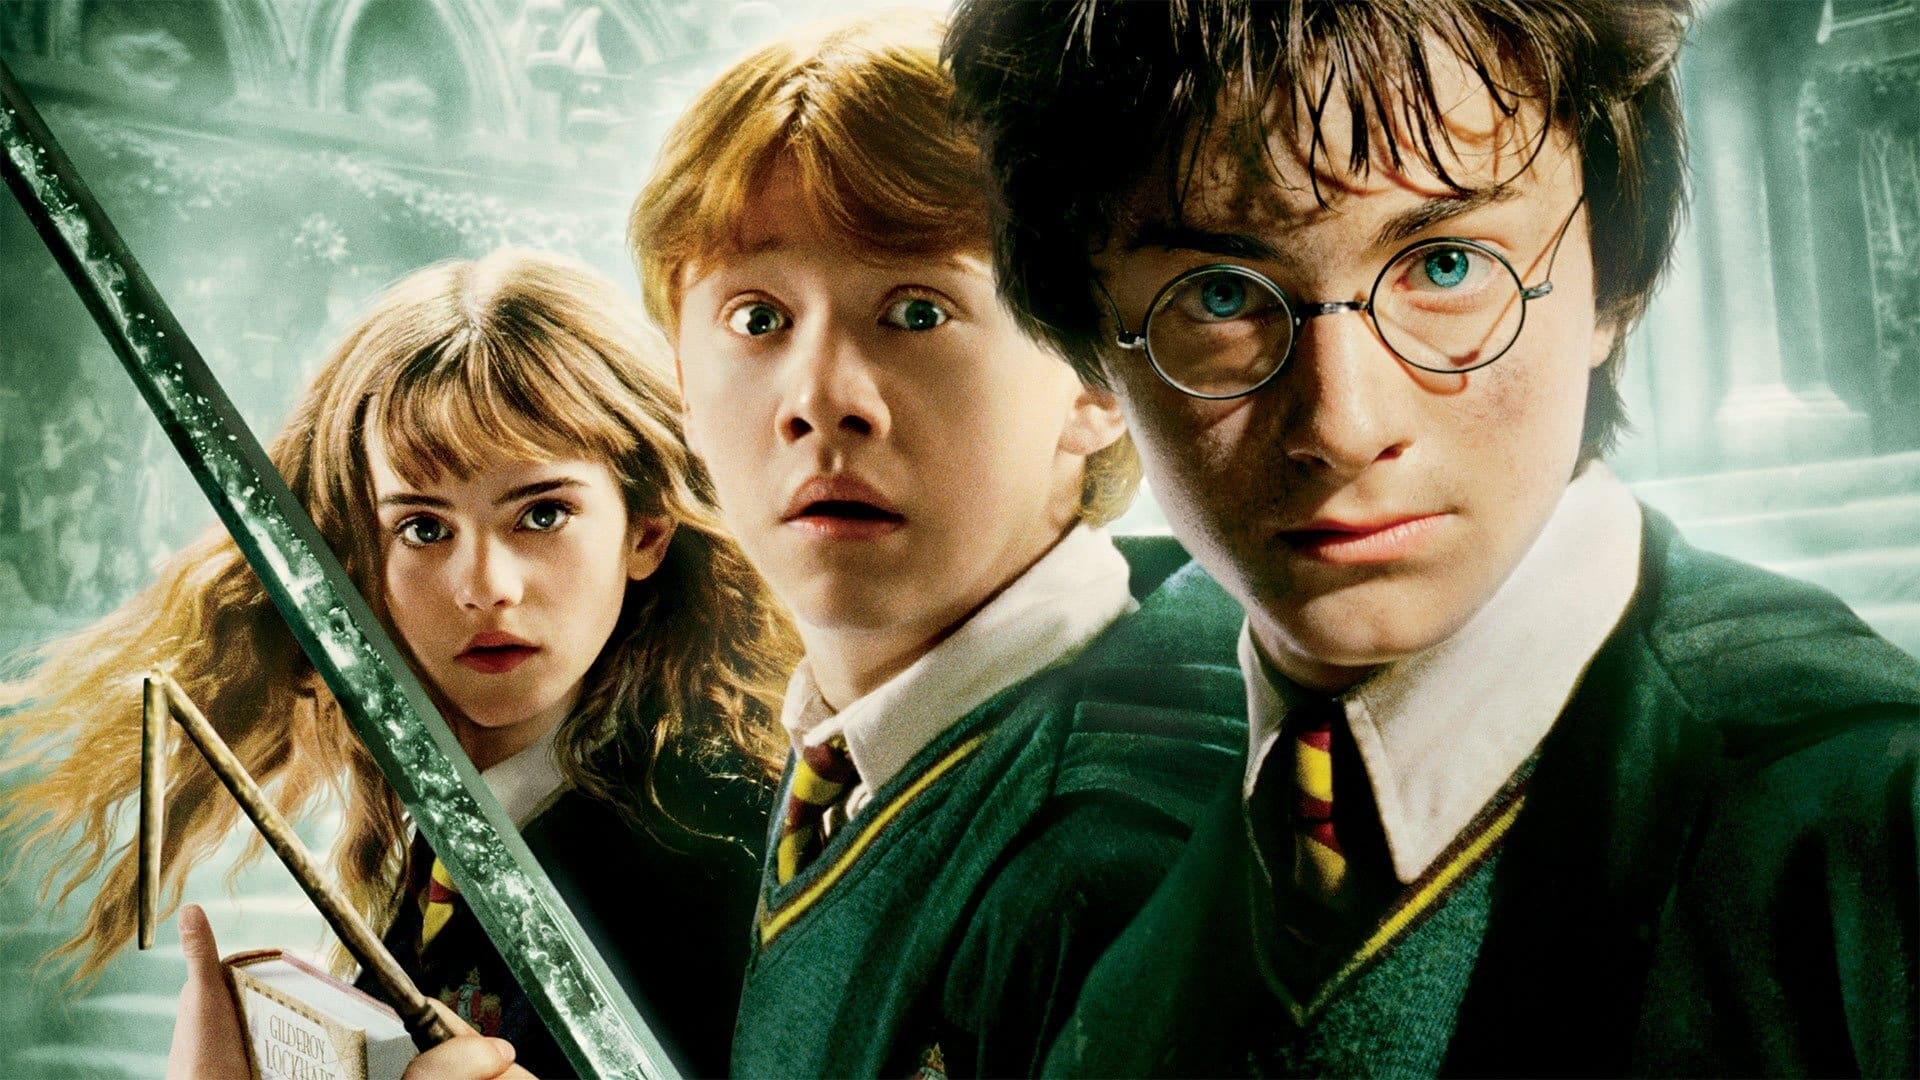 Image du film Harry Potter et la Chambre des secrets (version longue) td9iopmp9stljbrdyvsiinihftsjpg